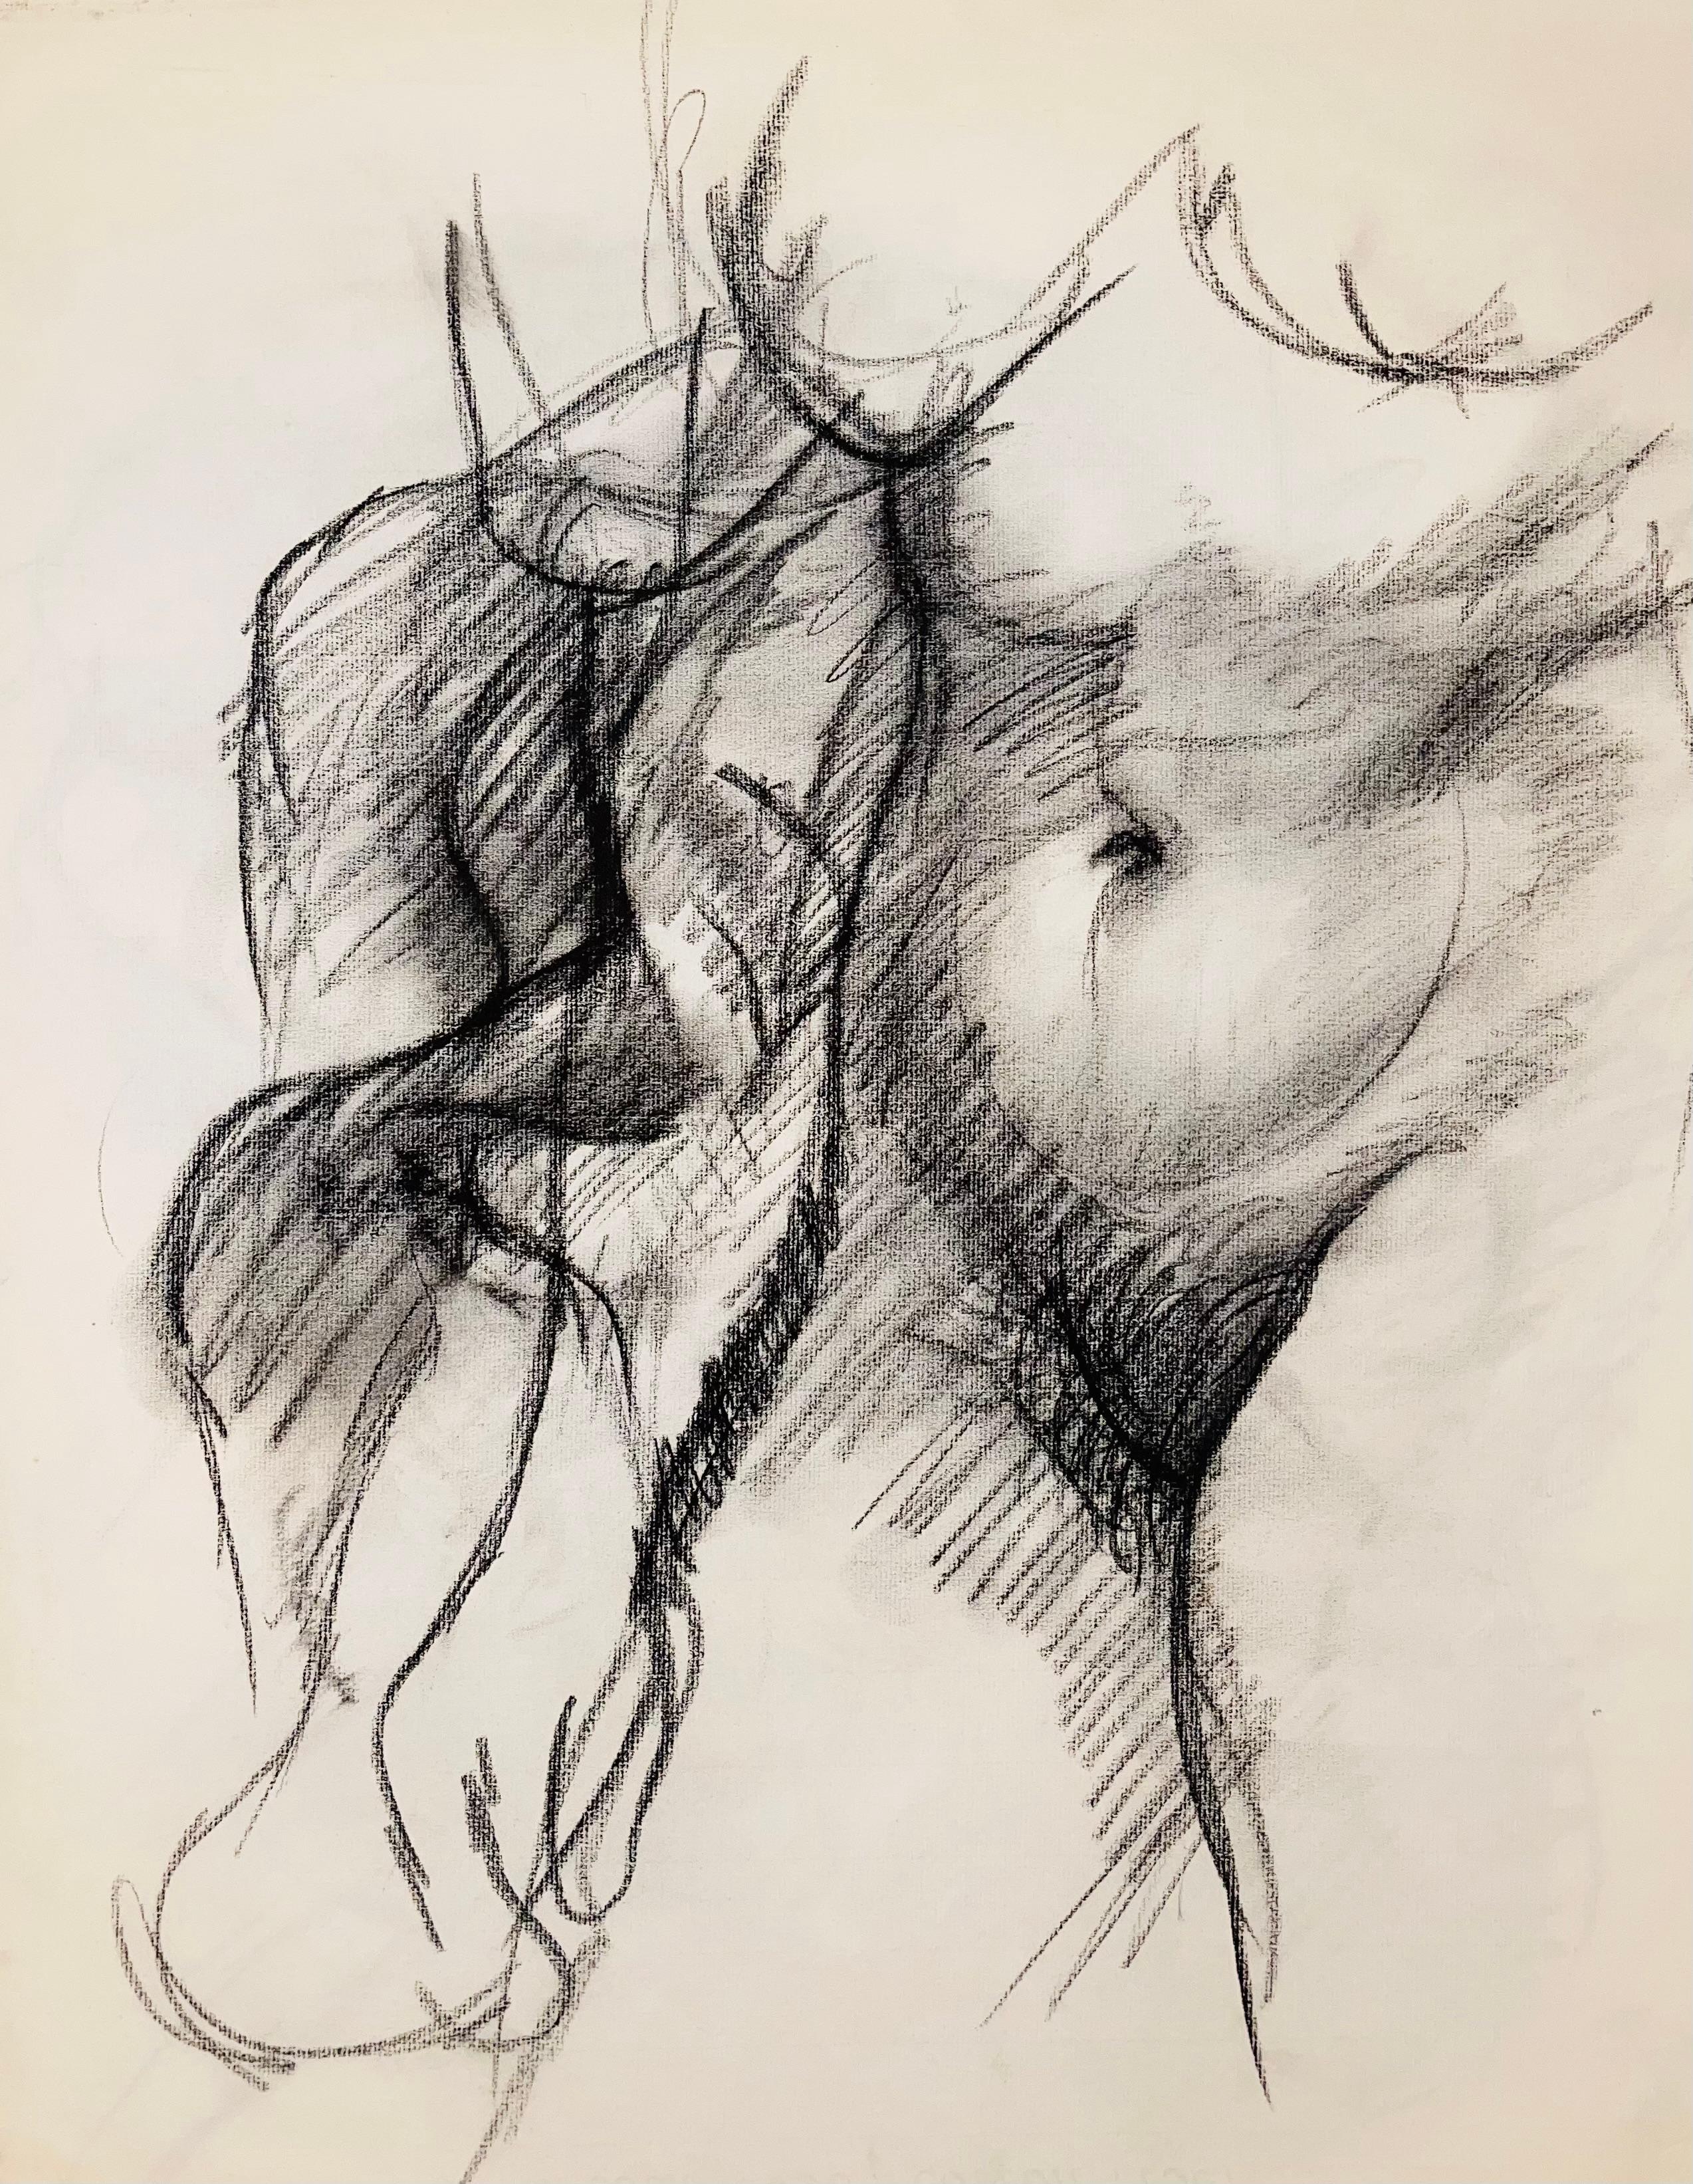 Untitled (Renaissance Female Nude Figure Study), 1963, Ian Hornak — Drawing